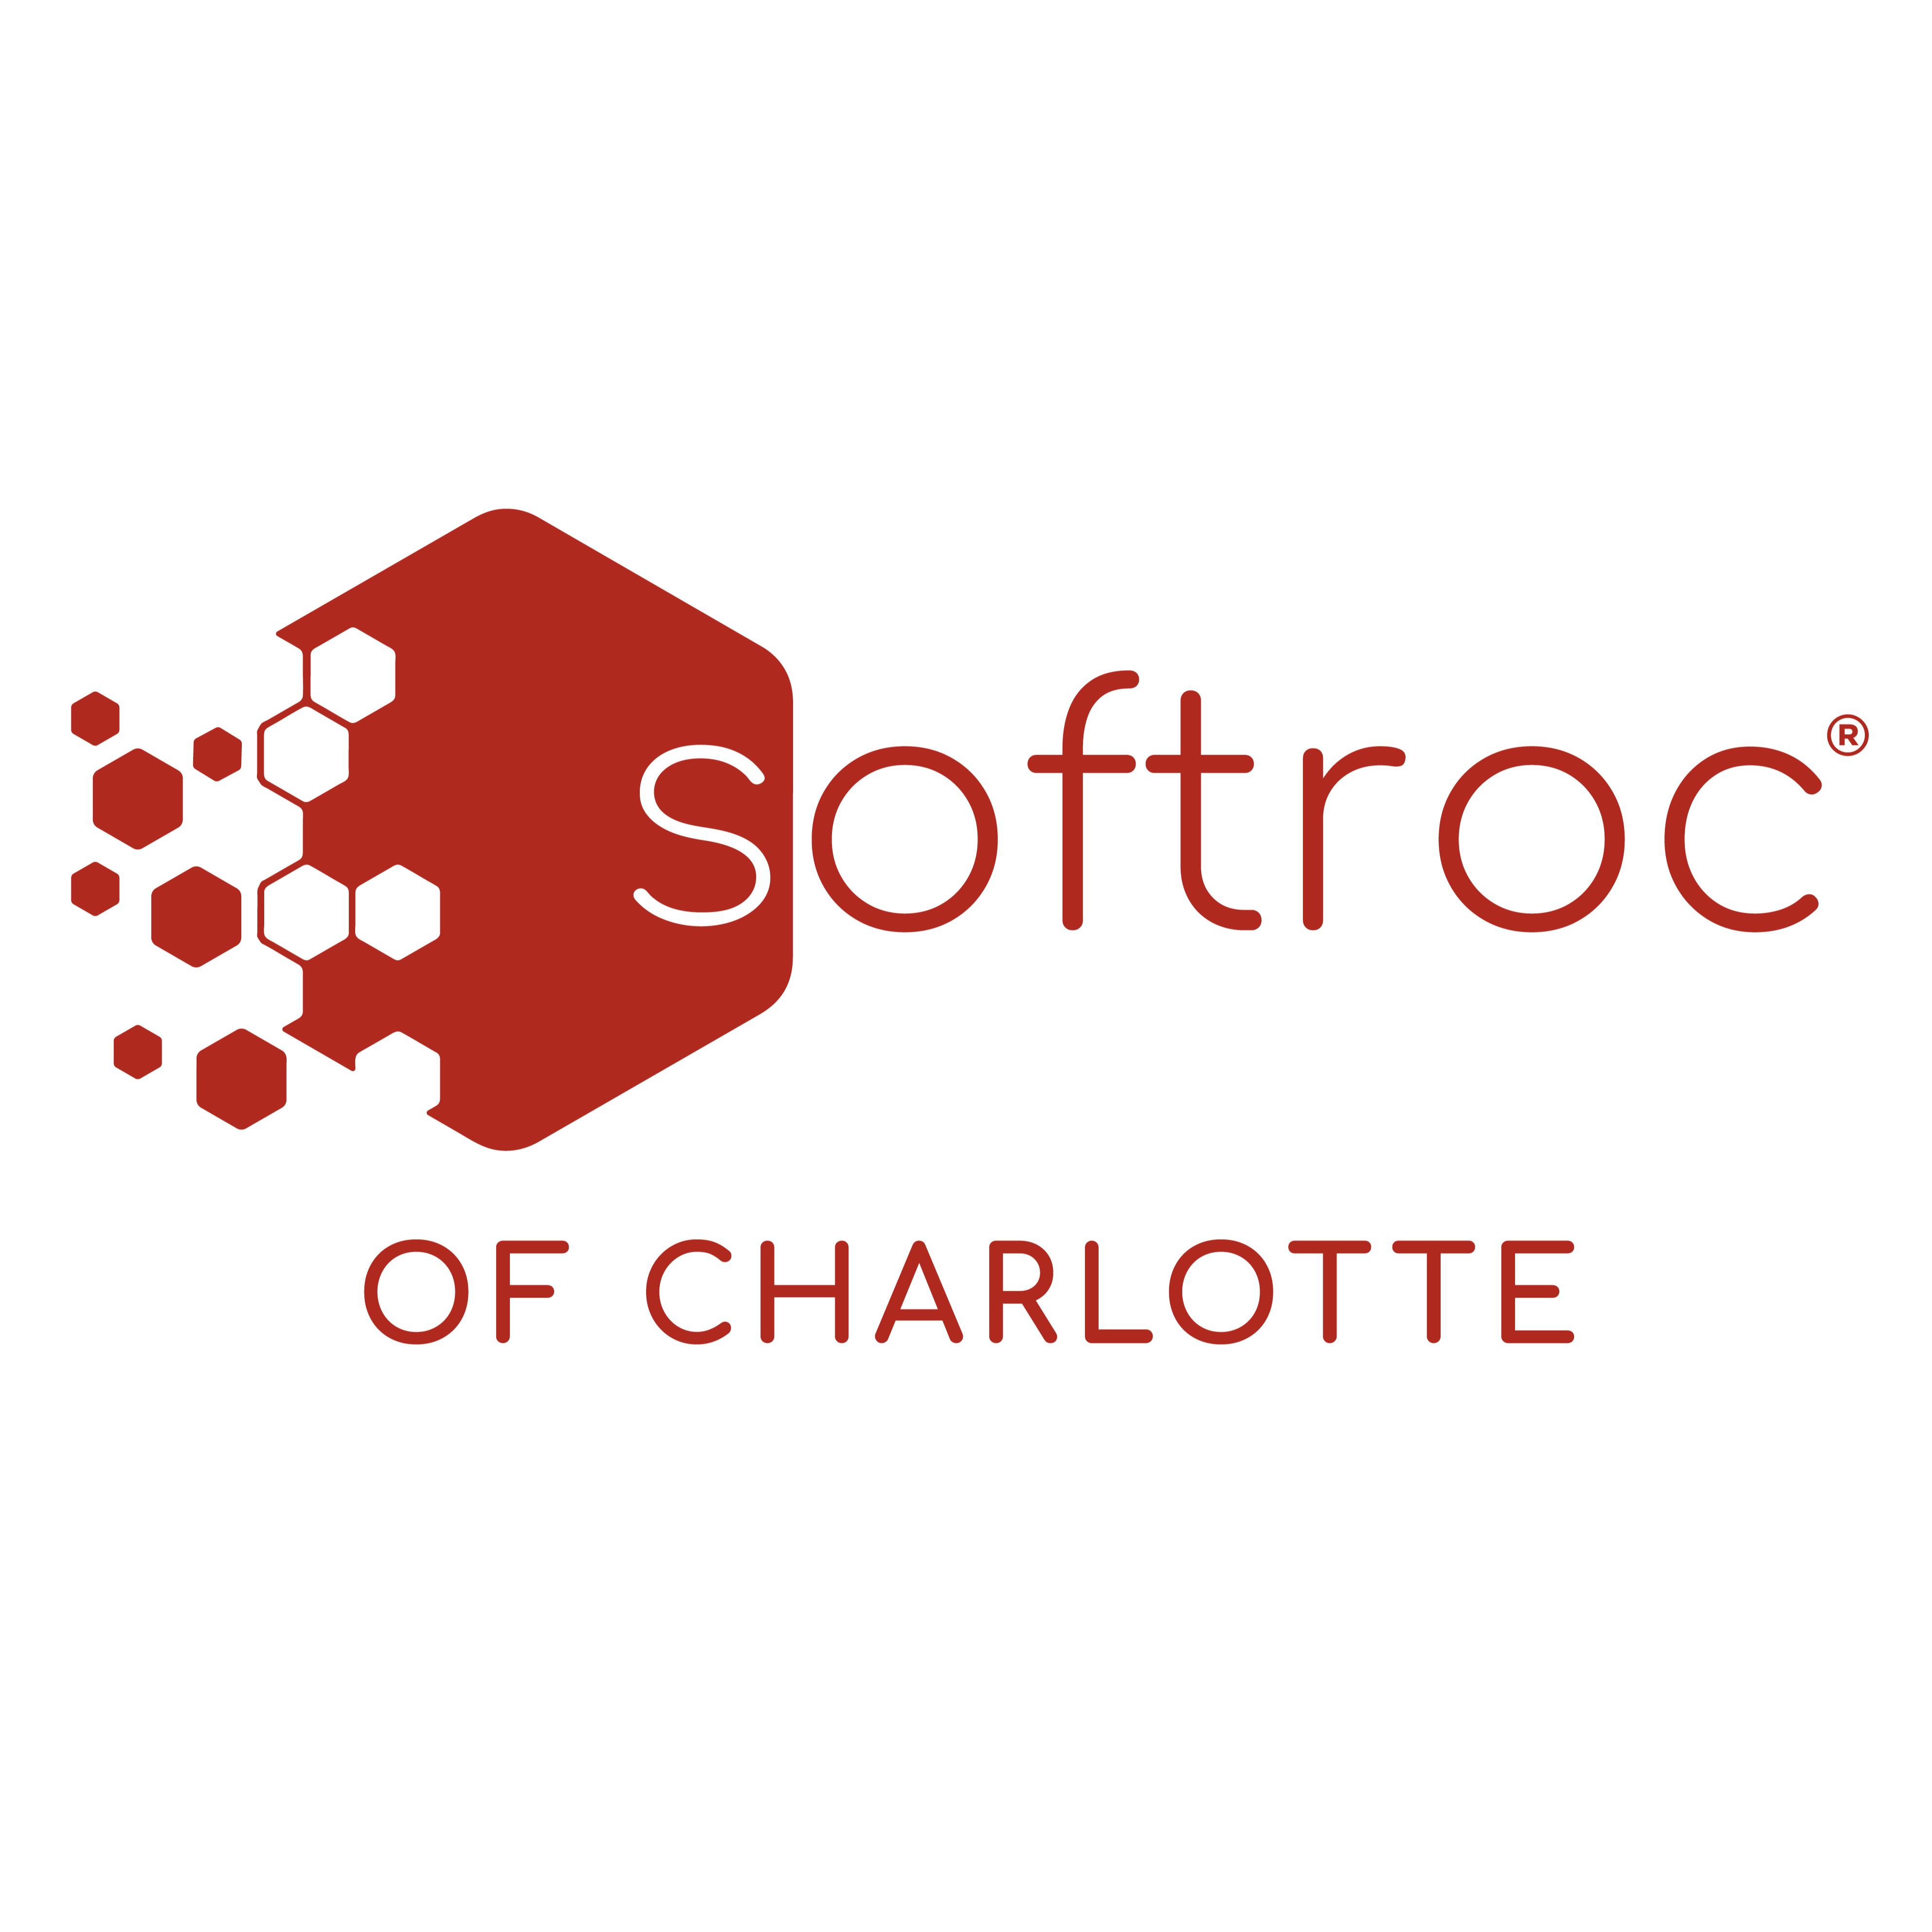 Softroc of Charlotte